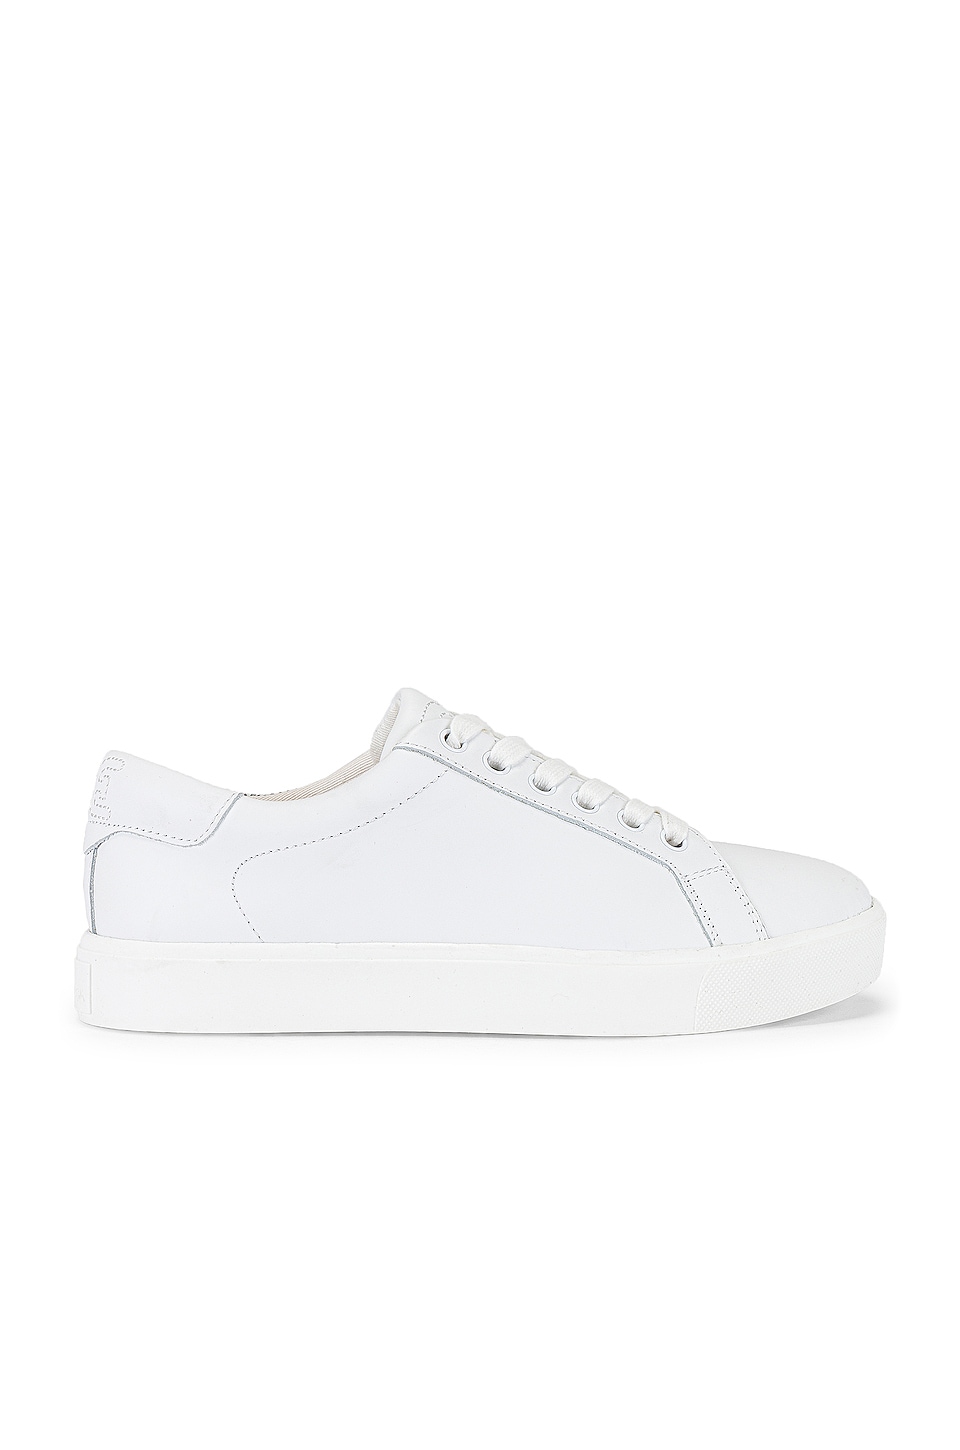 Sam Edelman Ethyl Sneaker in Bright White | REVOLVE